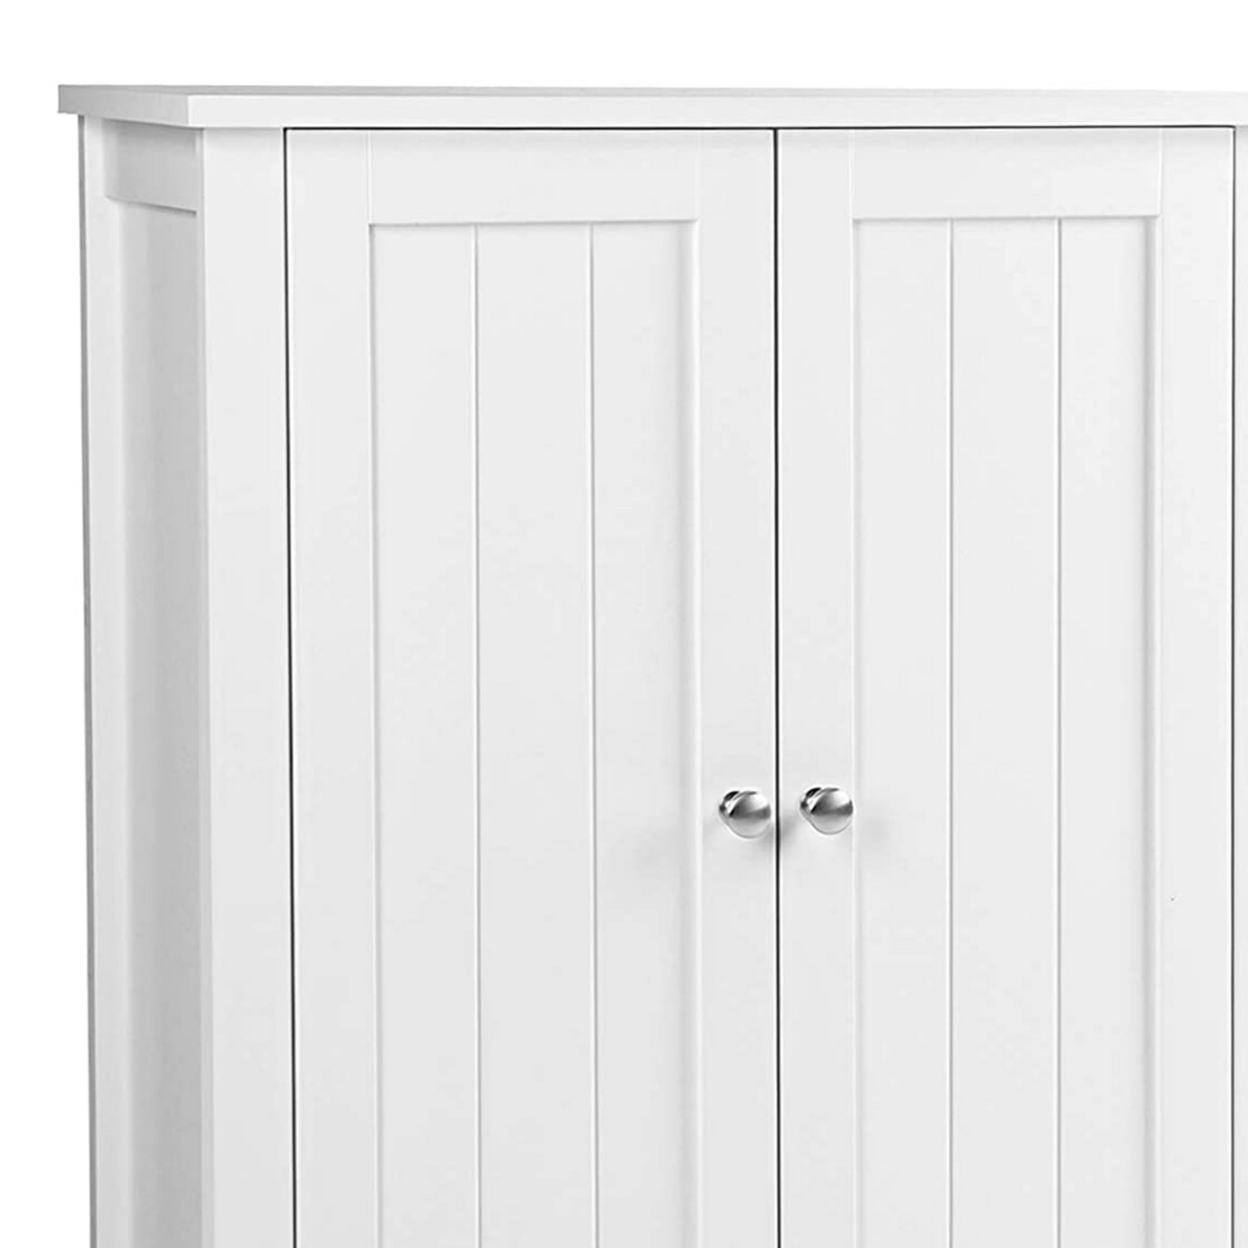 Deavan 31 Inch Wood Bathroom Storage Cabinet, 2 Doors, Plank Style, White- Saltoro Sherpi